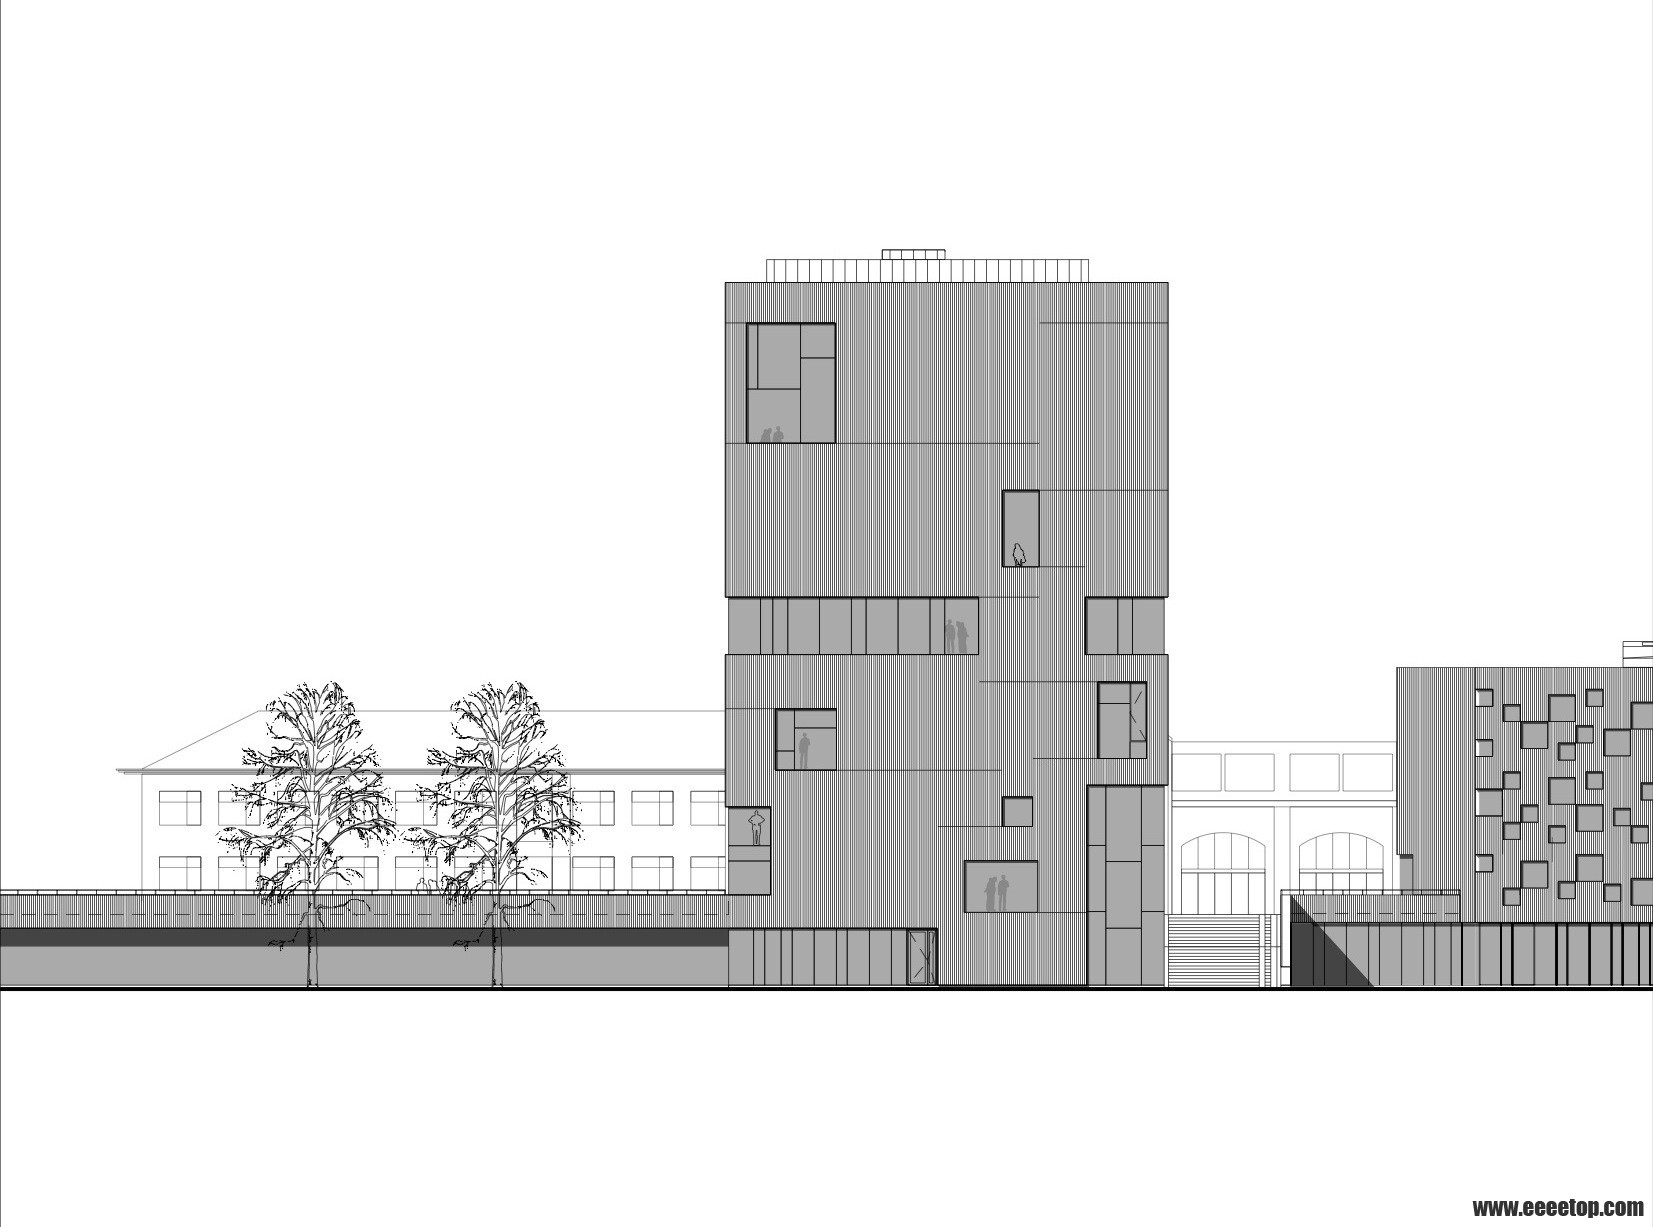 Henning_Larsen_Architects_Umeaa_Art_Museum_Bildmuseet_Facade_south_1-400.jpg